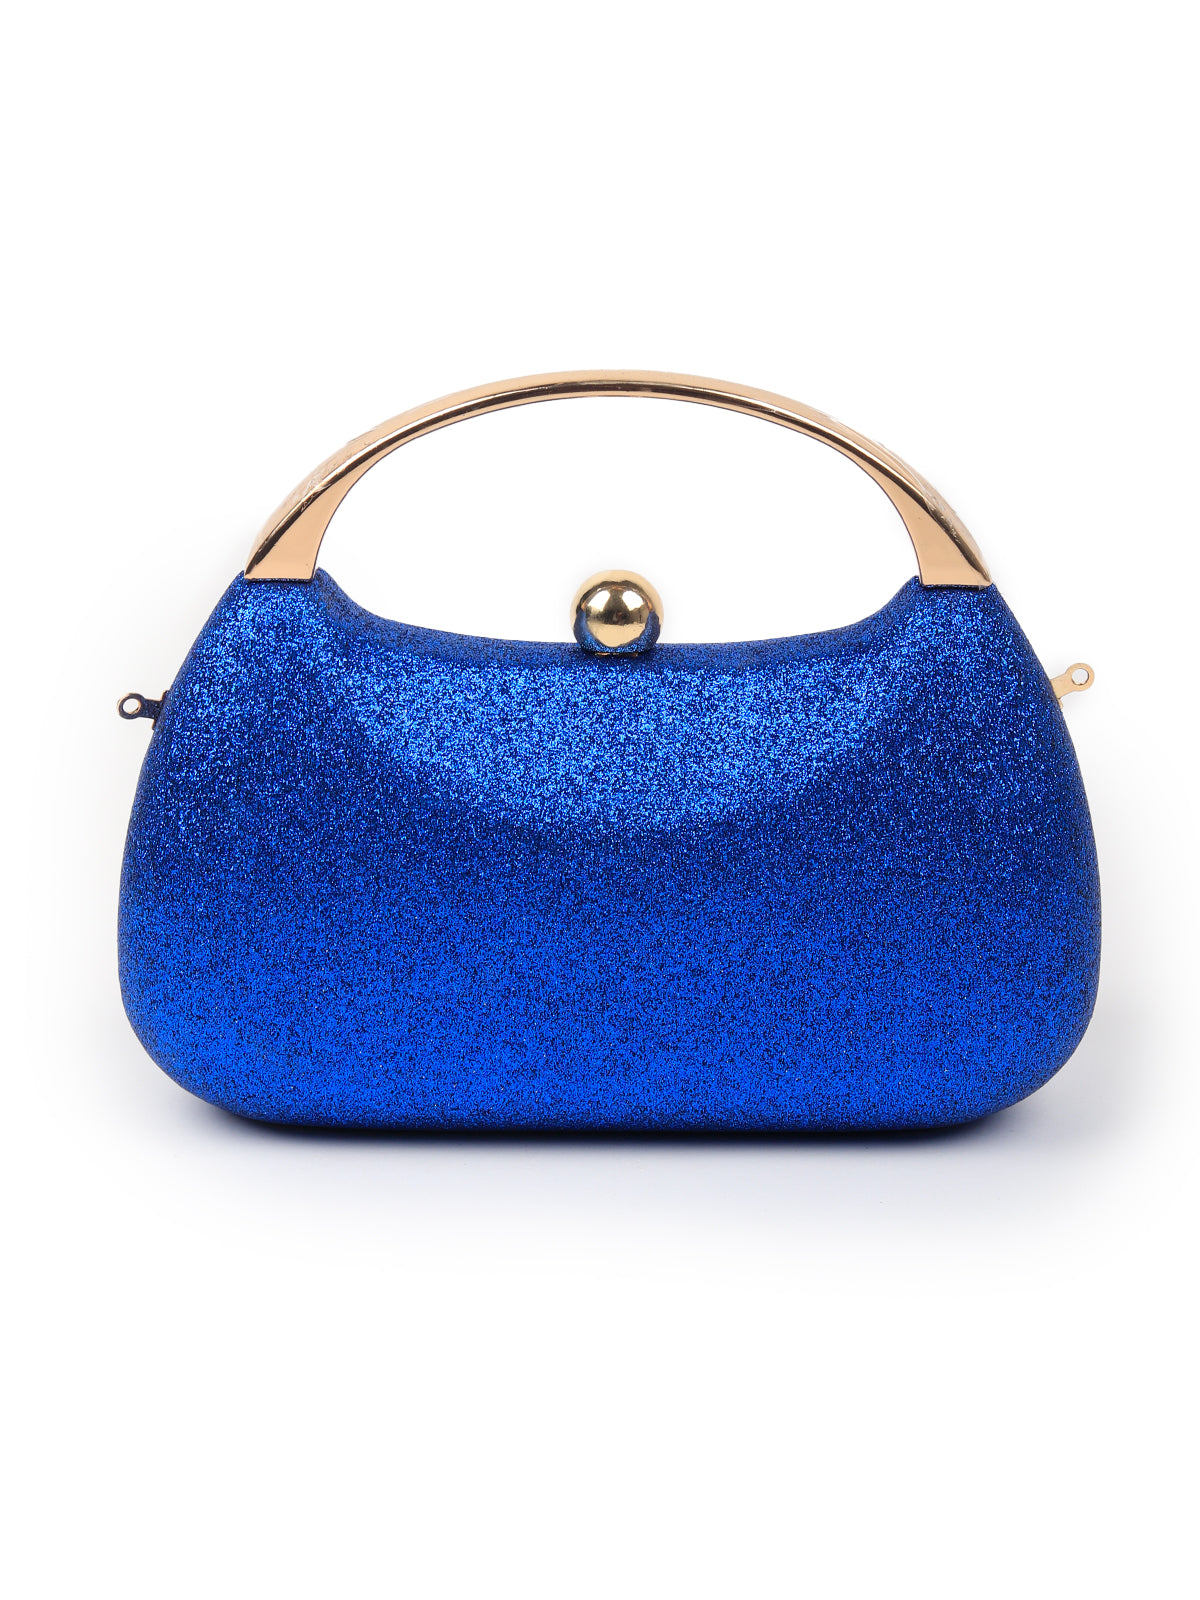 Evening Bags Handbags Clutch Purse Faux Leather - Buy online UK, Ireland,  Worldwide - Aurora